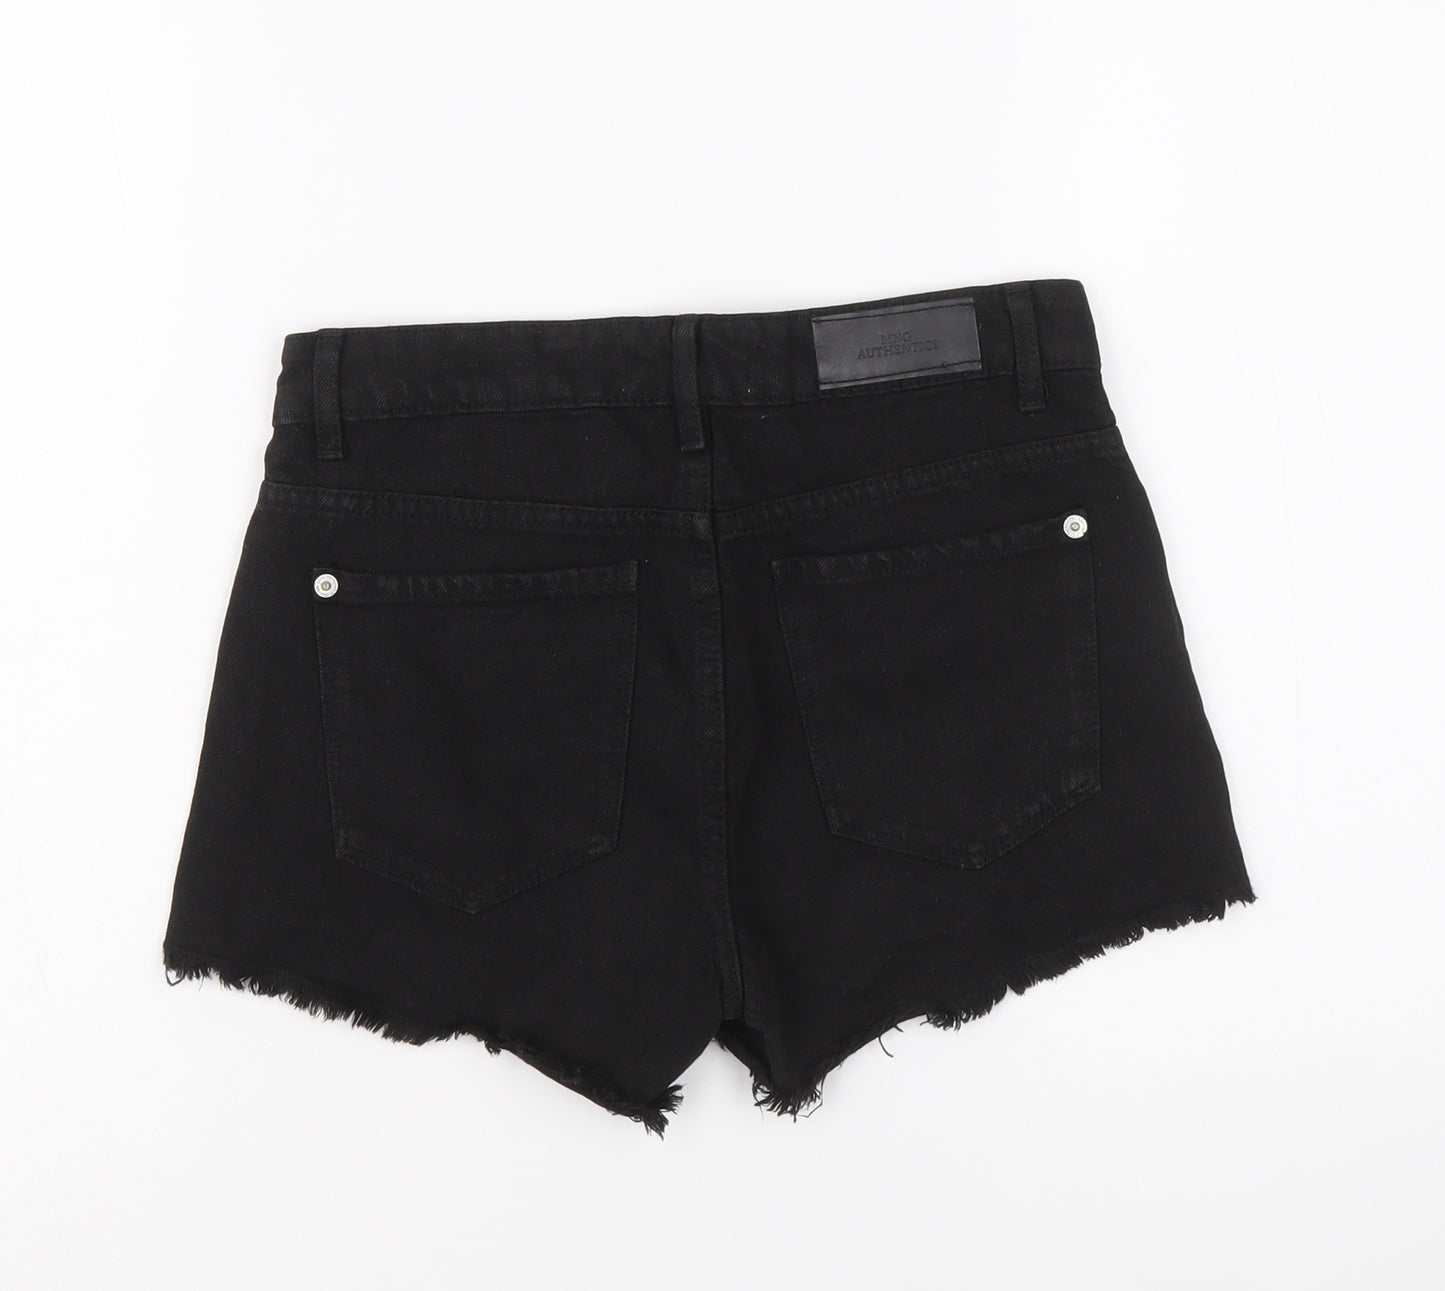 Mango Womens Black Cotton Hot Pants Shorts Size 6 L3 in Regular Button